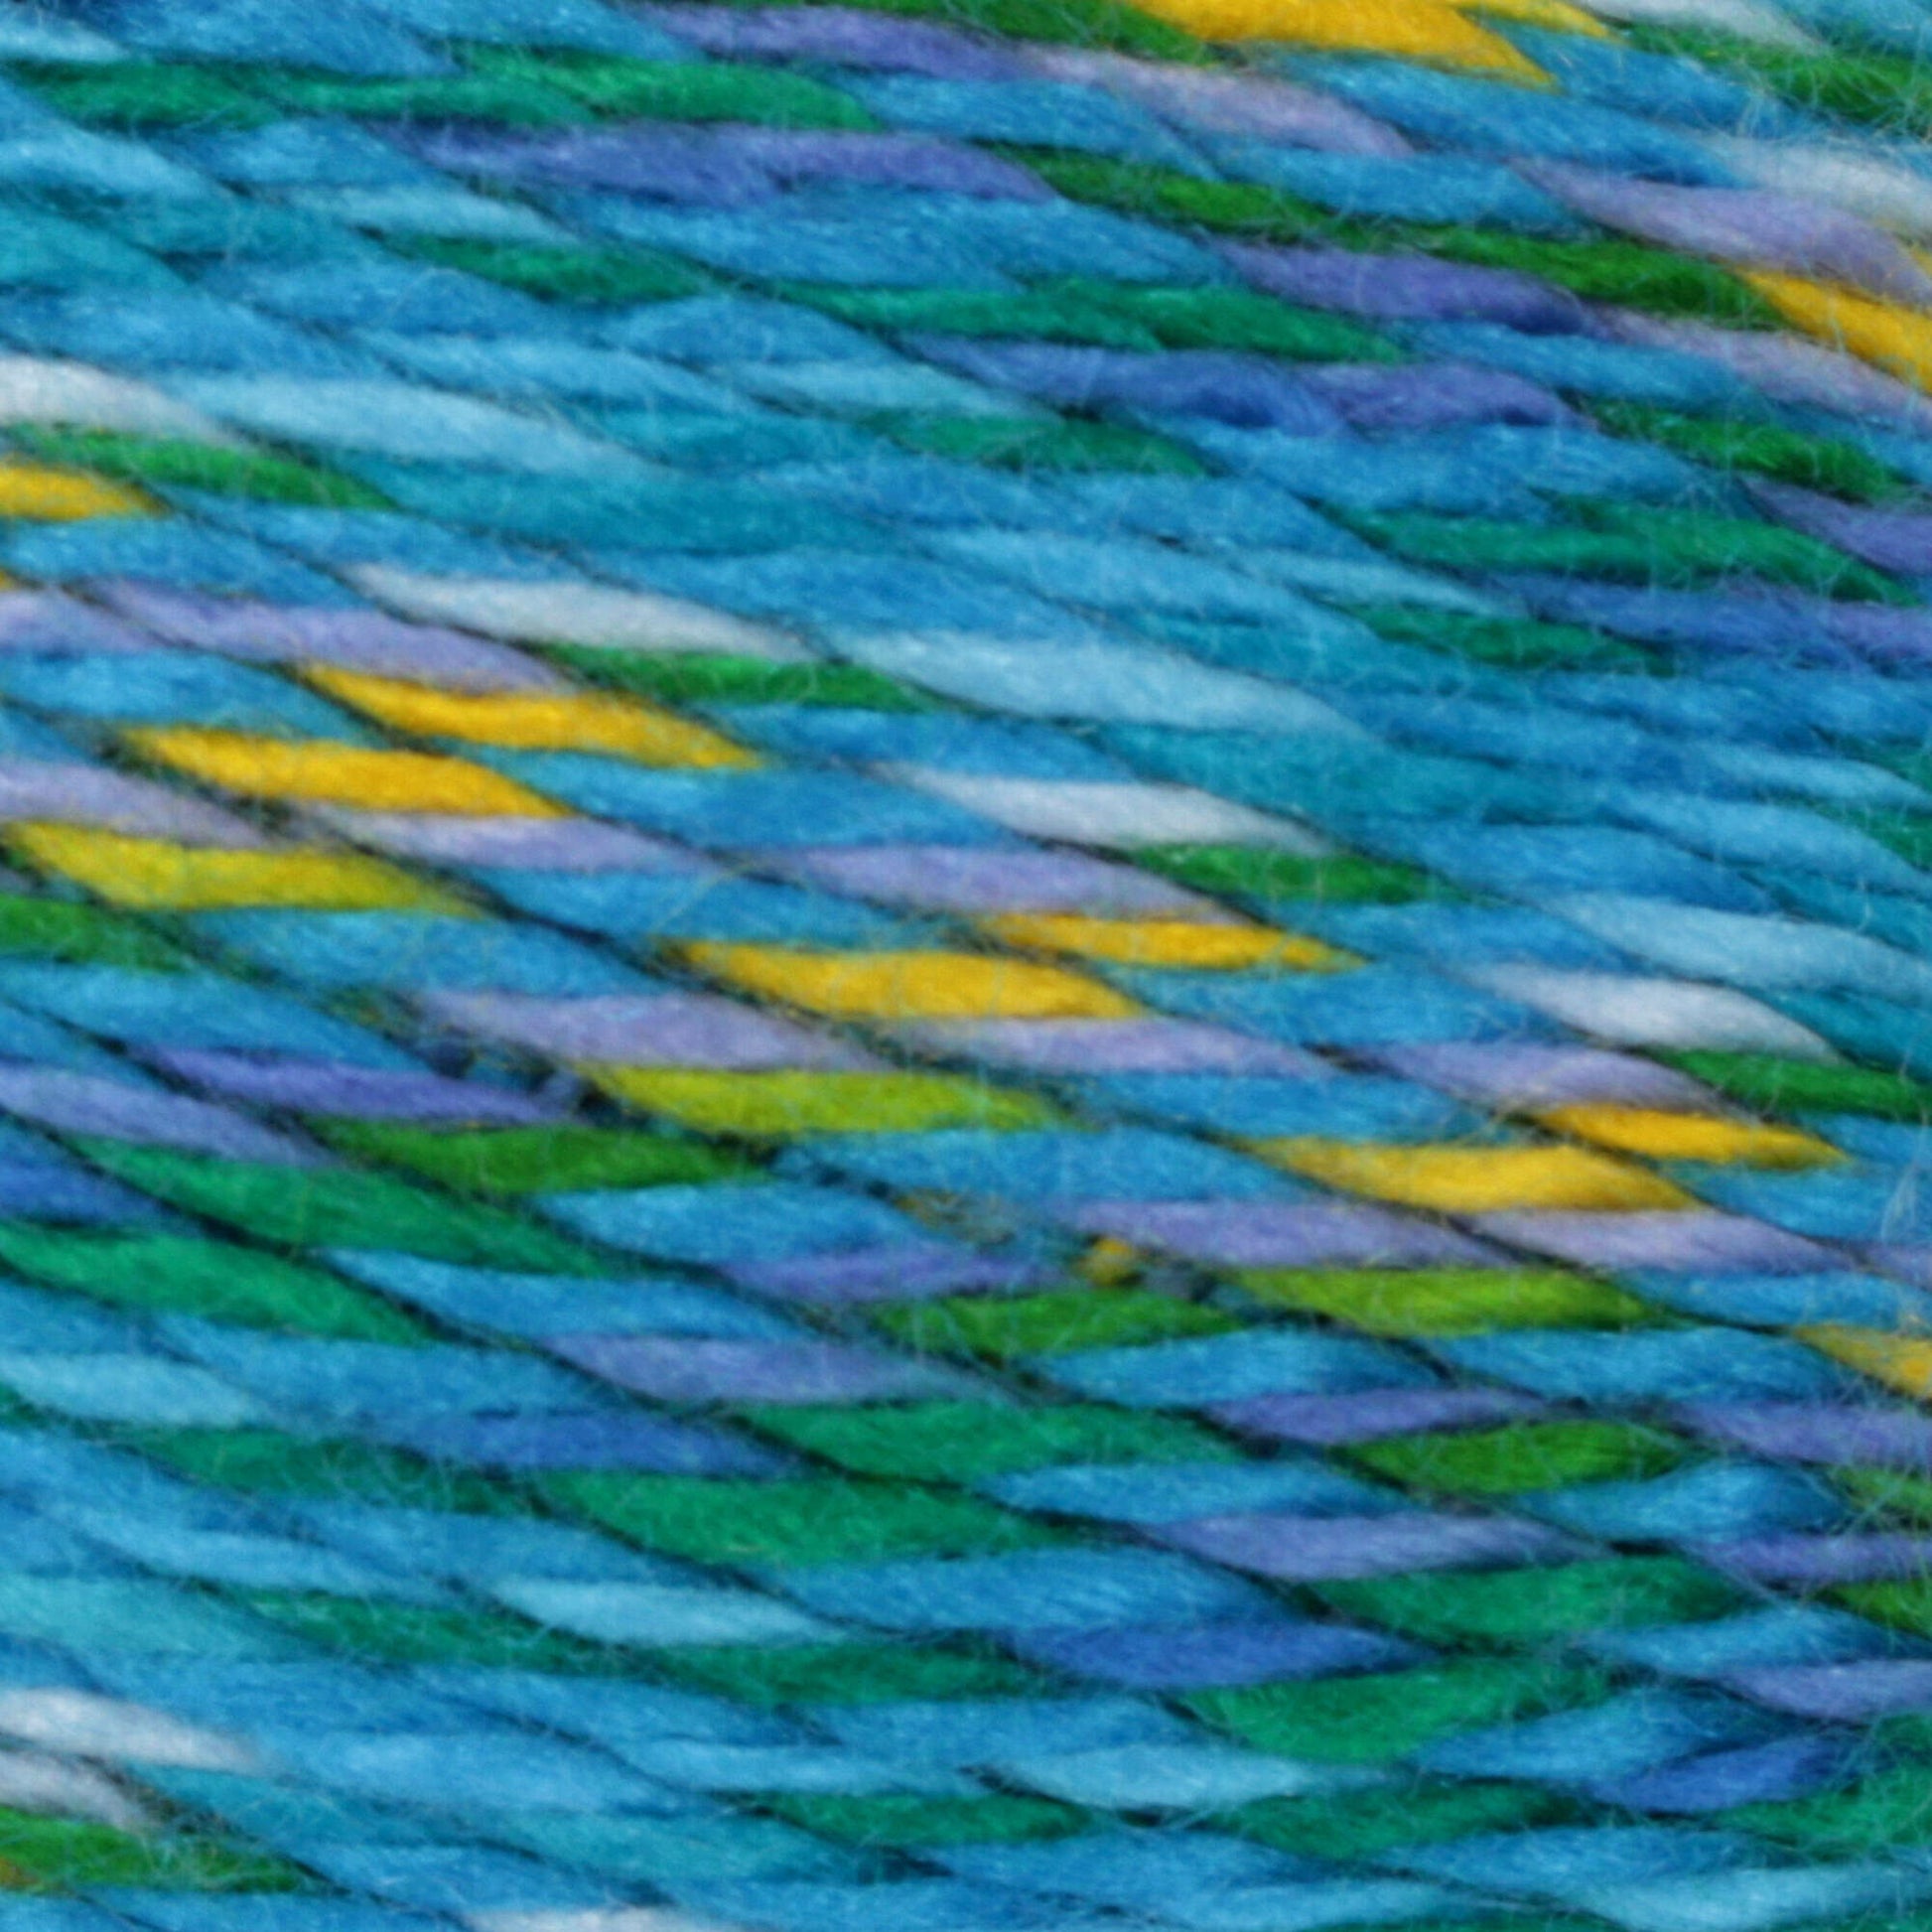 Bernat Softee Baby Colors Yarn - Discontinued Shades Teal Rainbow